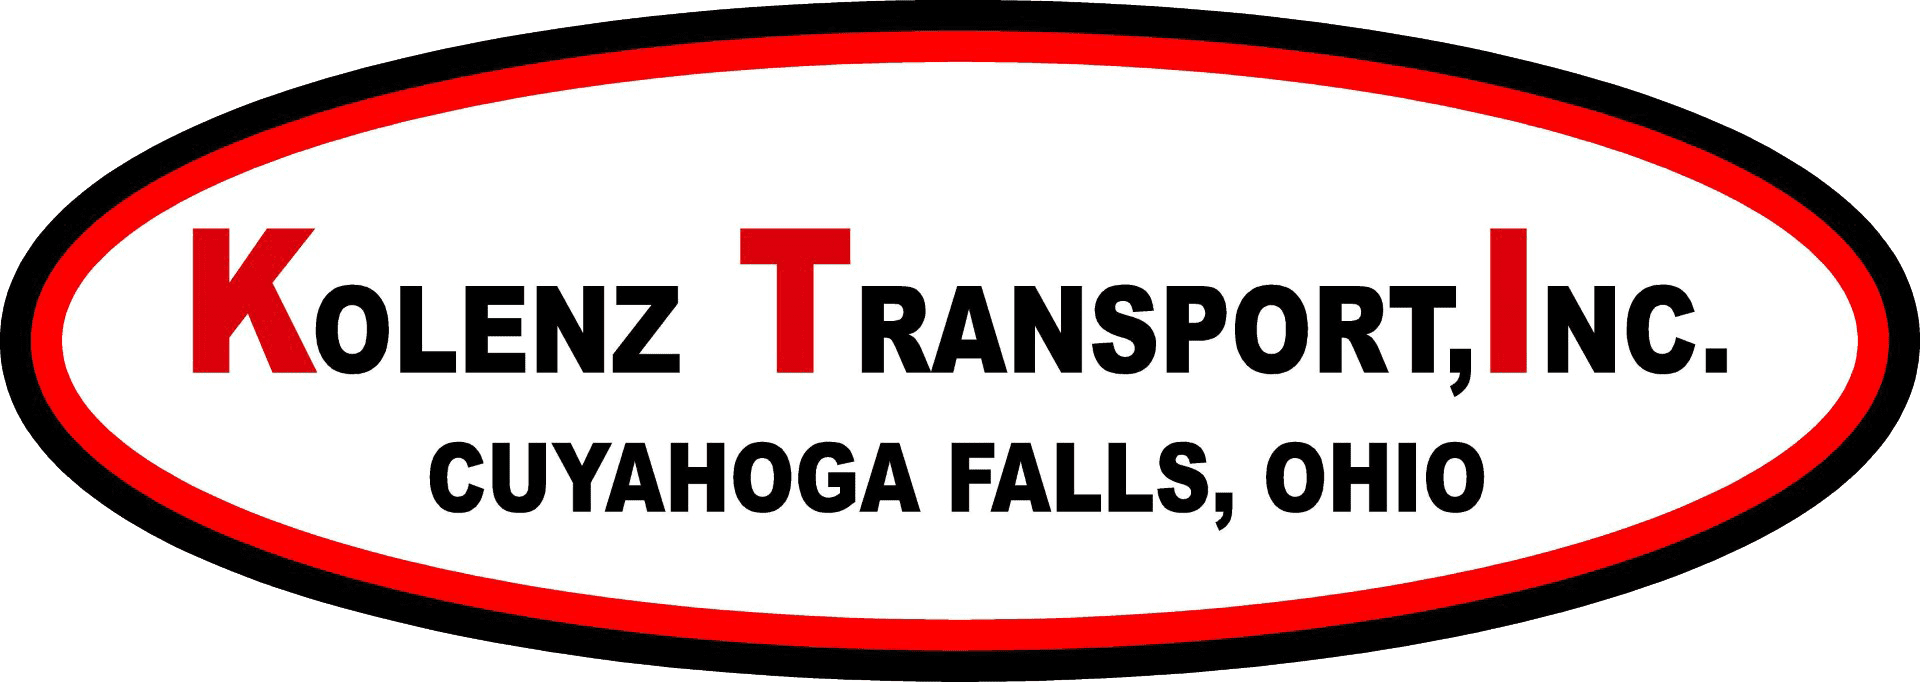 Kolenz Transport, Inc.